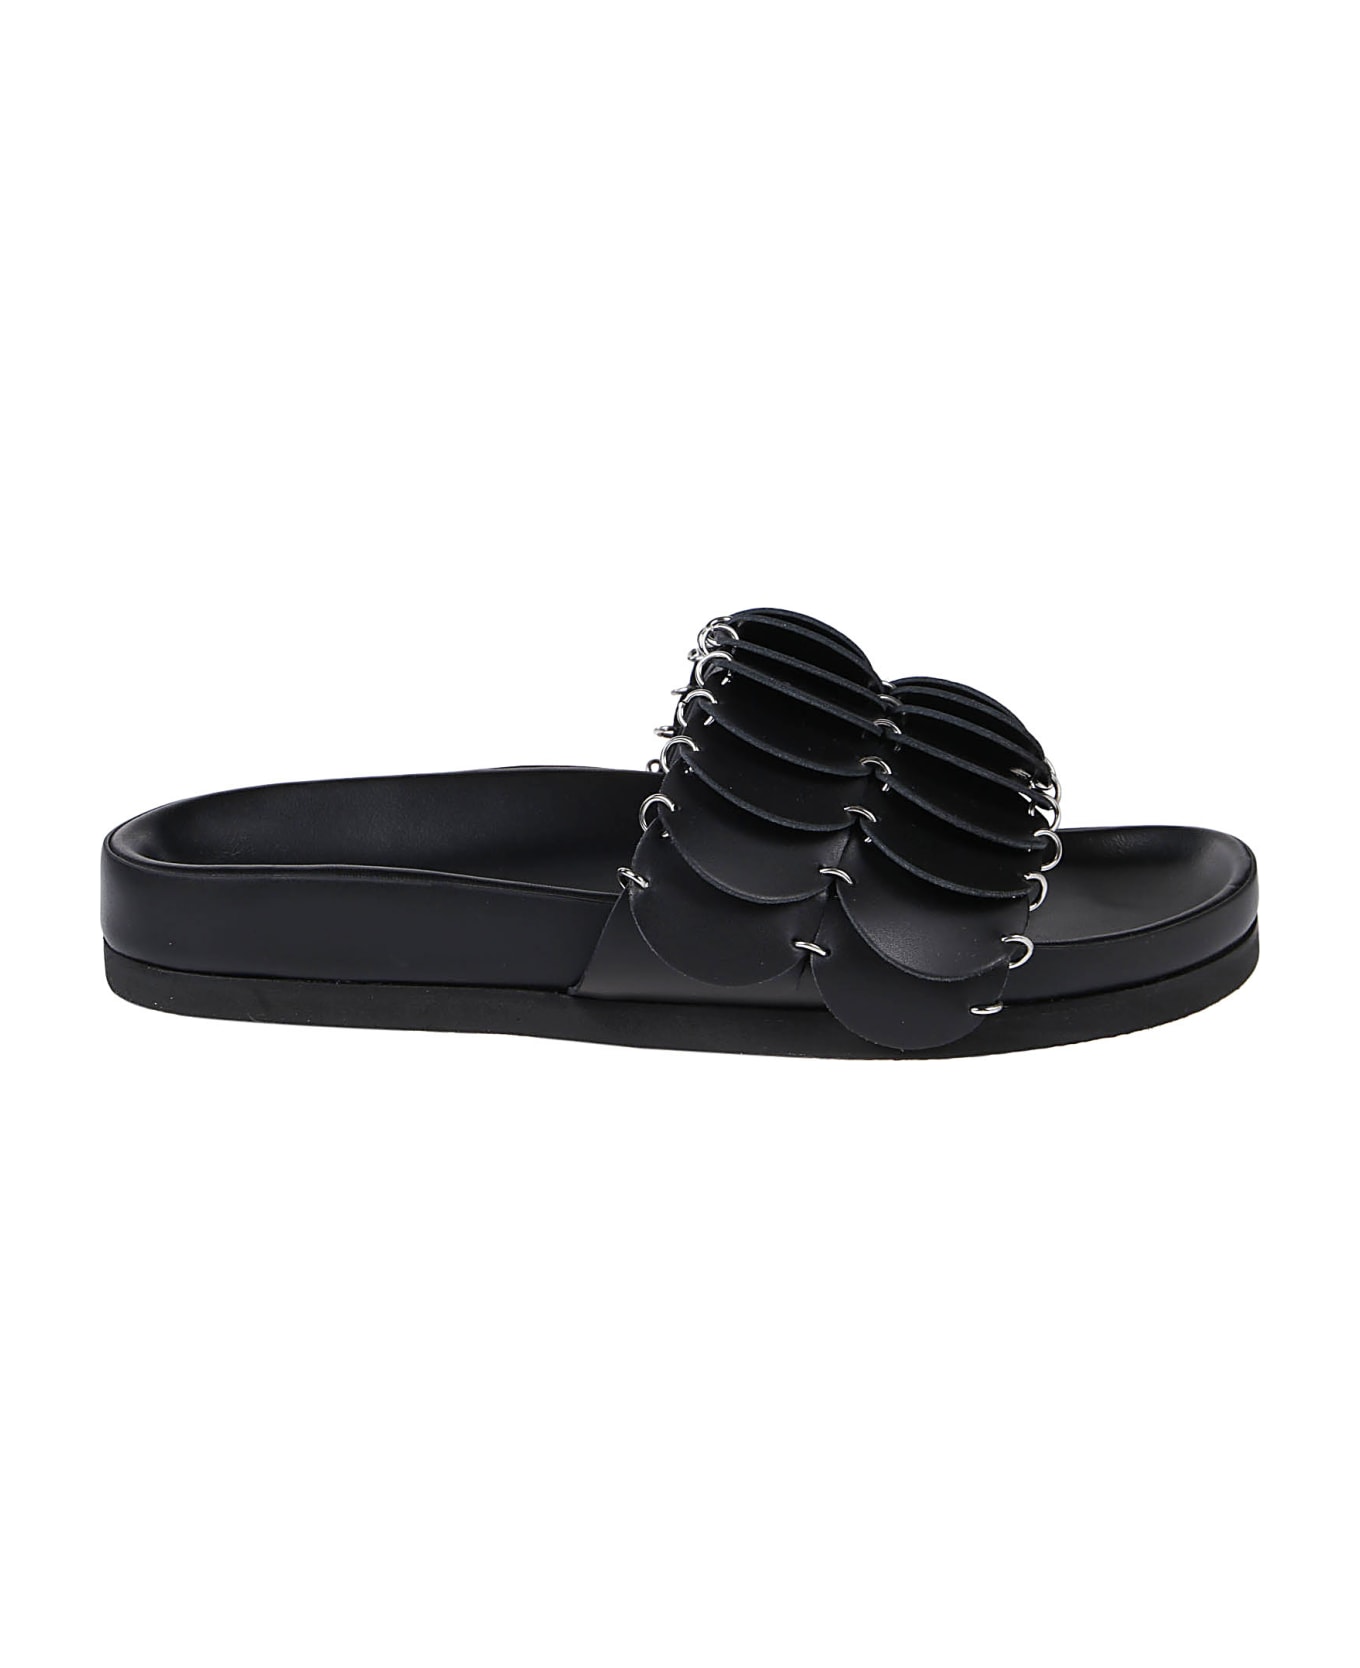 Paco Rabanne Pacoio Slide Sandals - Black